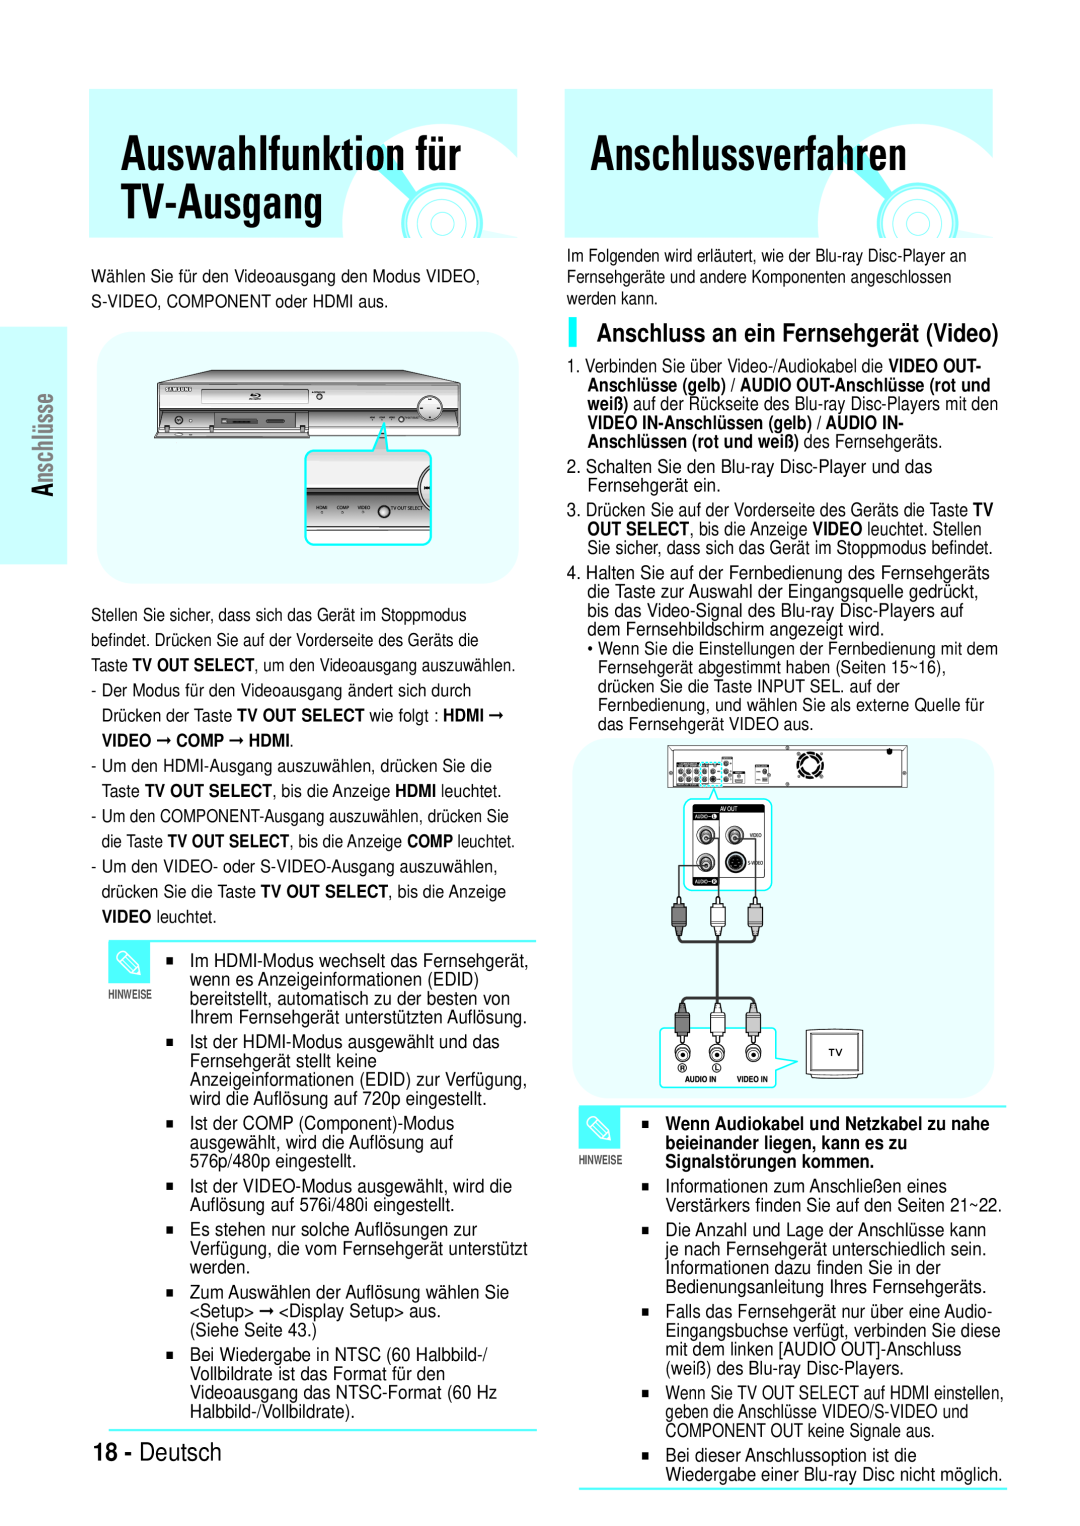 Samsung BD-P1000/XEL Anschlussverfahren, Auswahlfunktion für TV-Ausgang, Deutsch, Anschluss an ein Fernsehgerät Video 